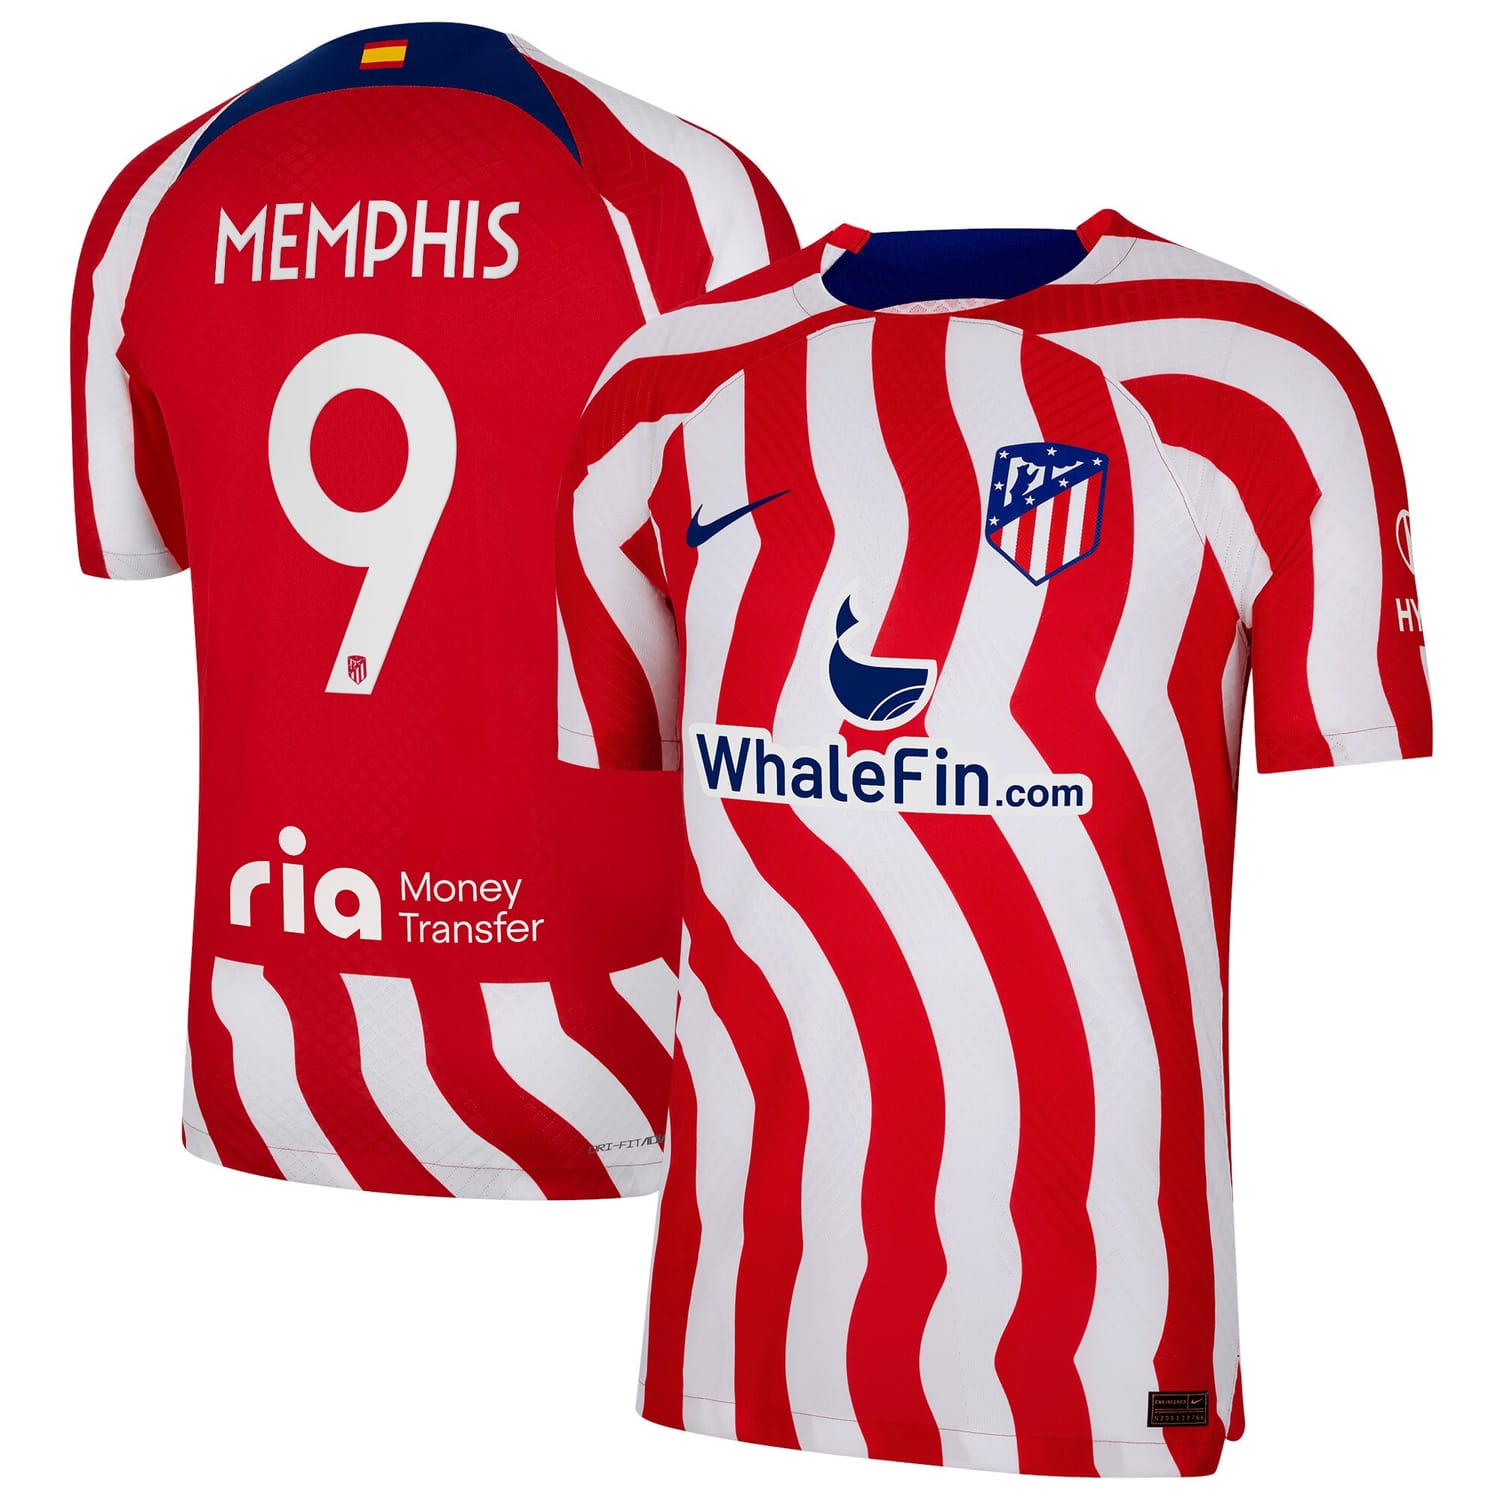 La Liga Atletico de Madrid Home Metropolitano Authentic Jersey Shirt 2022-23 player Memphis Depay 9 printing for Men